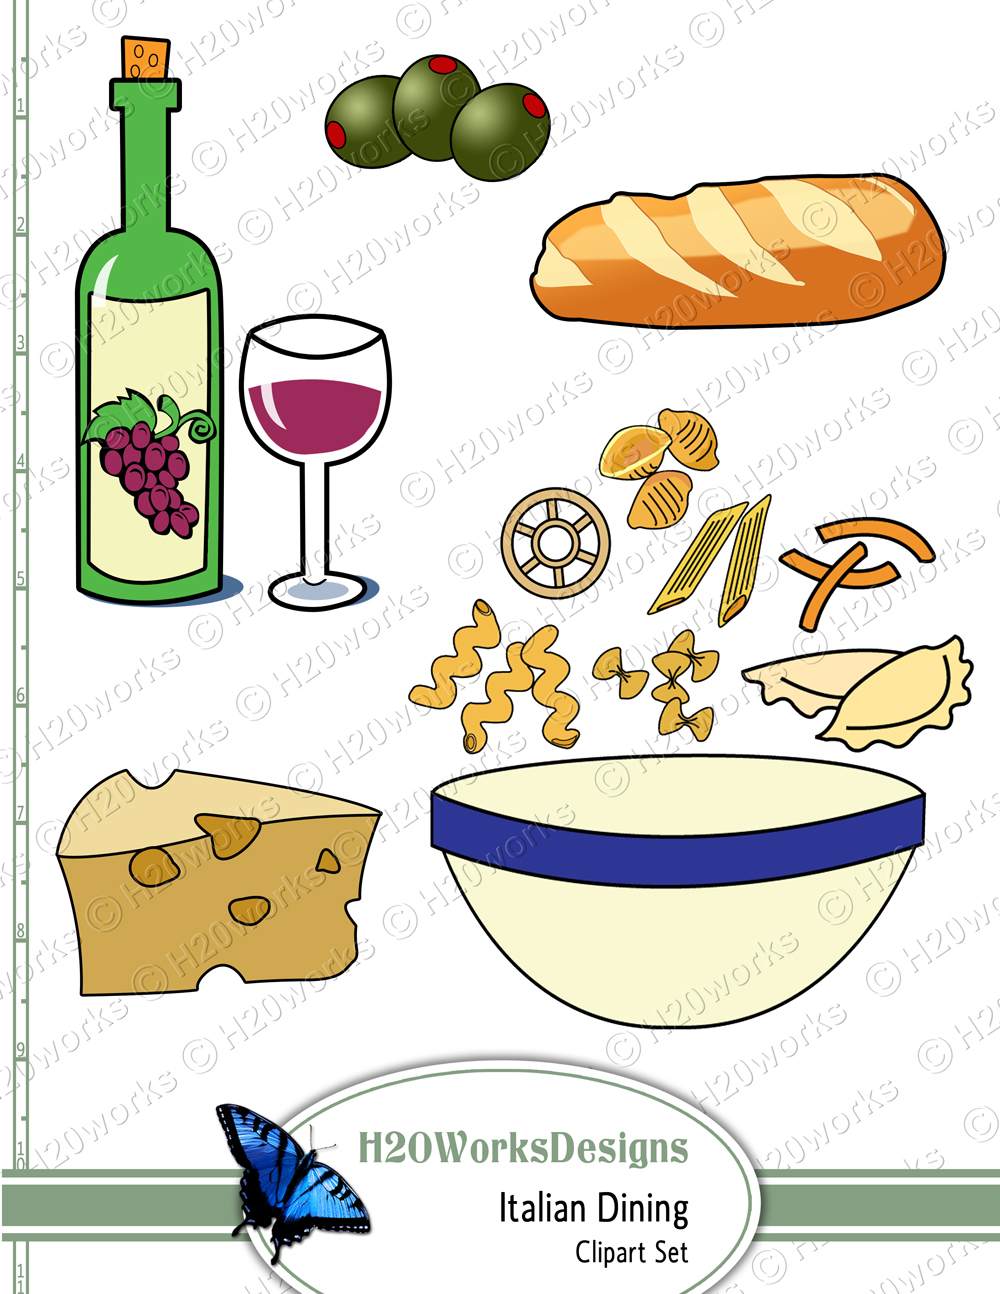 Italian Dining Clipart Set On 8 5x11 Sheet   Food Pasta Bowl Wine